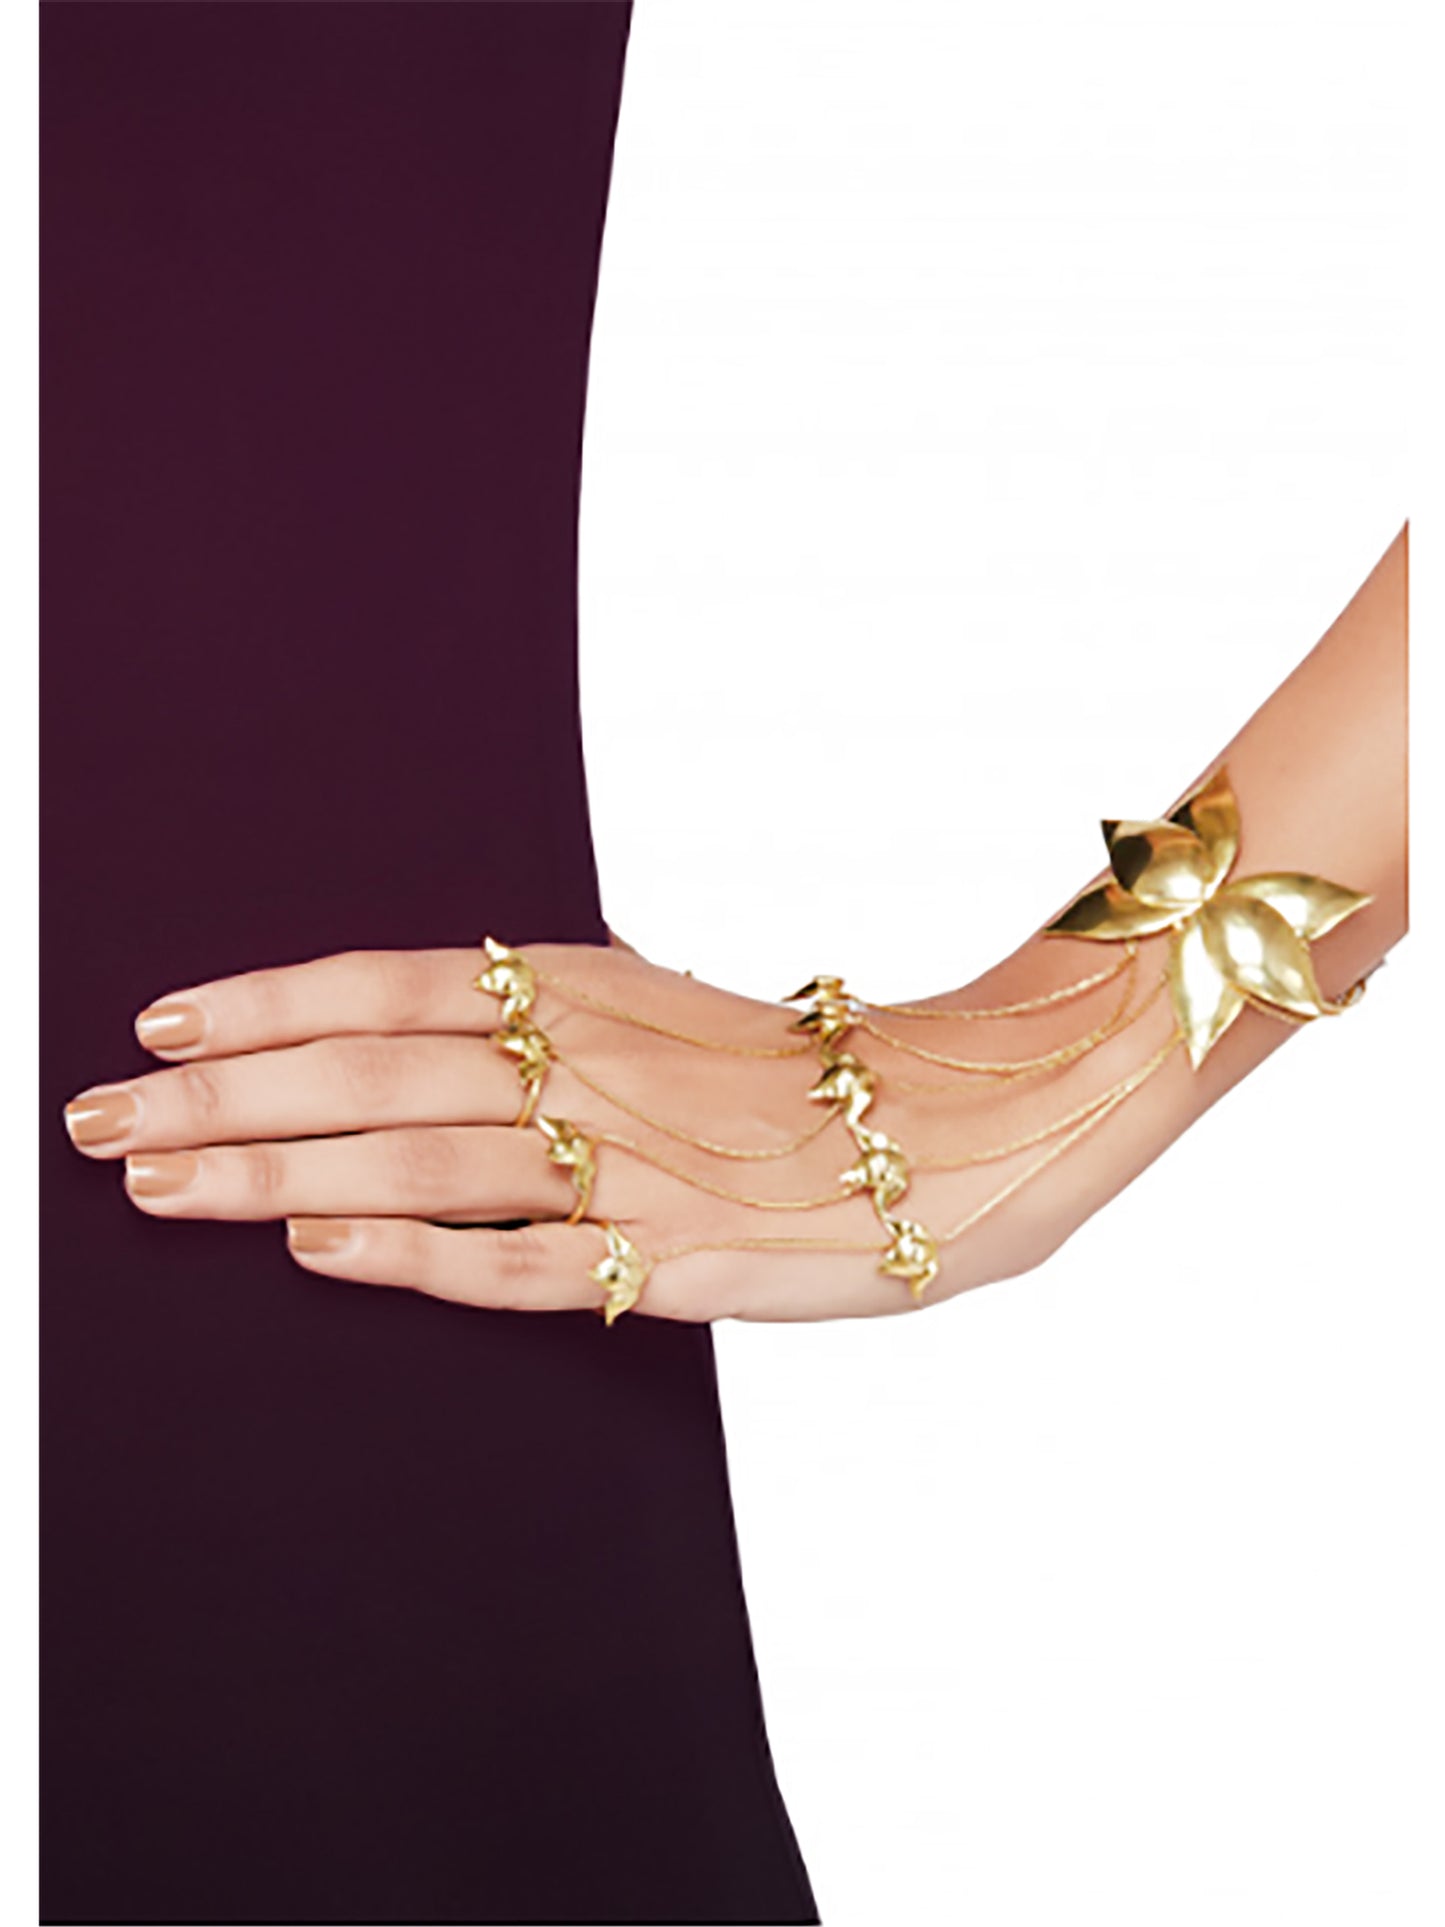 Five Finger Line Lotus Wedding Handharness